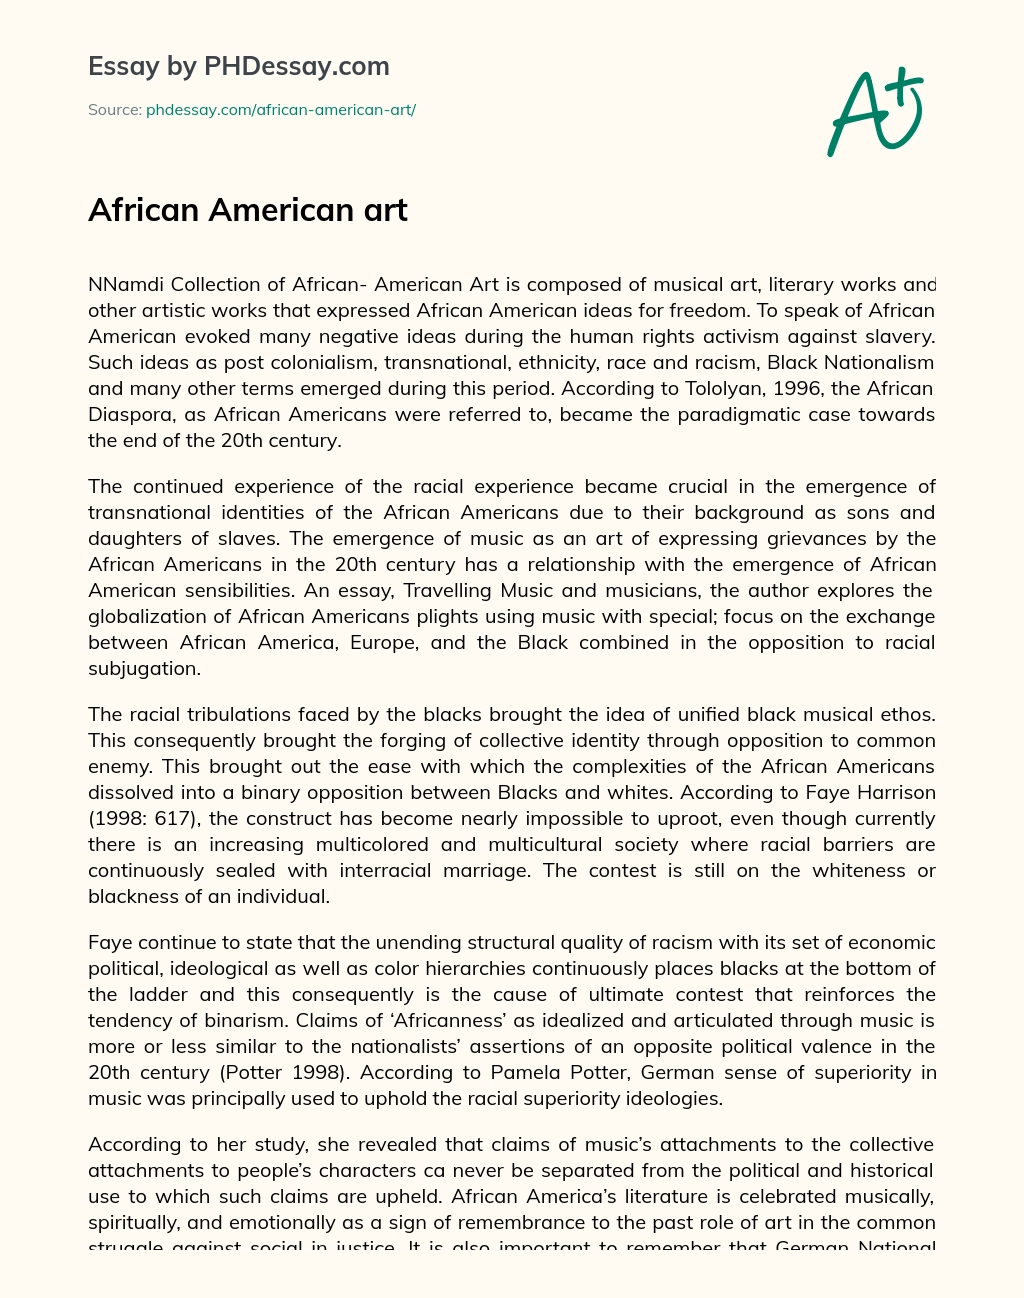 African American art essay